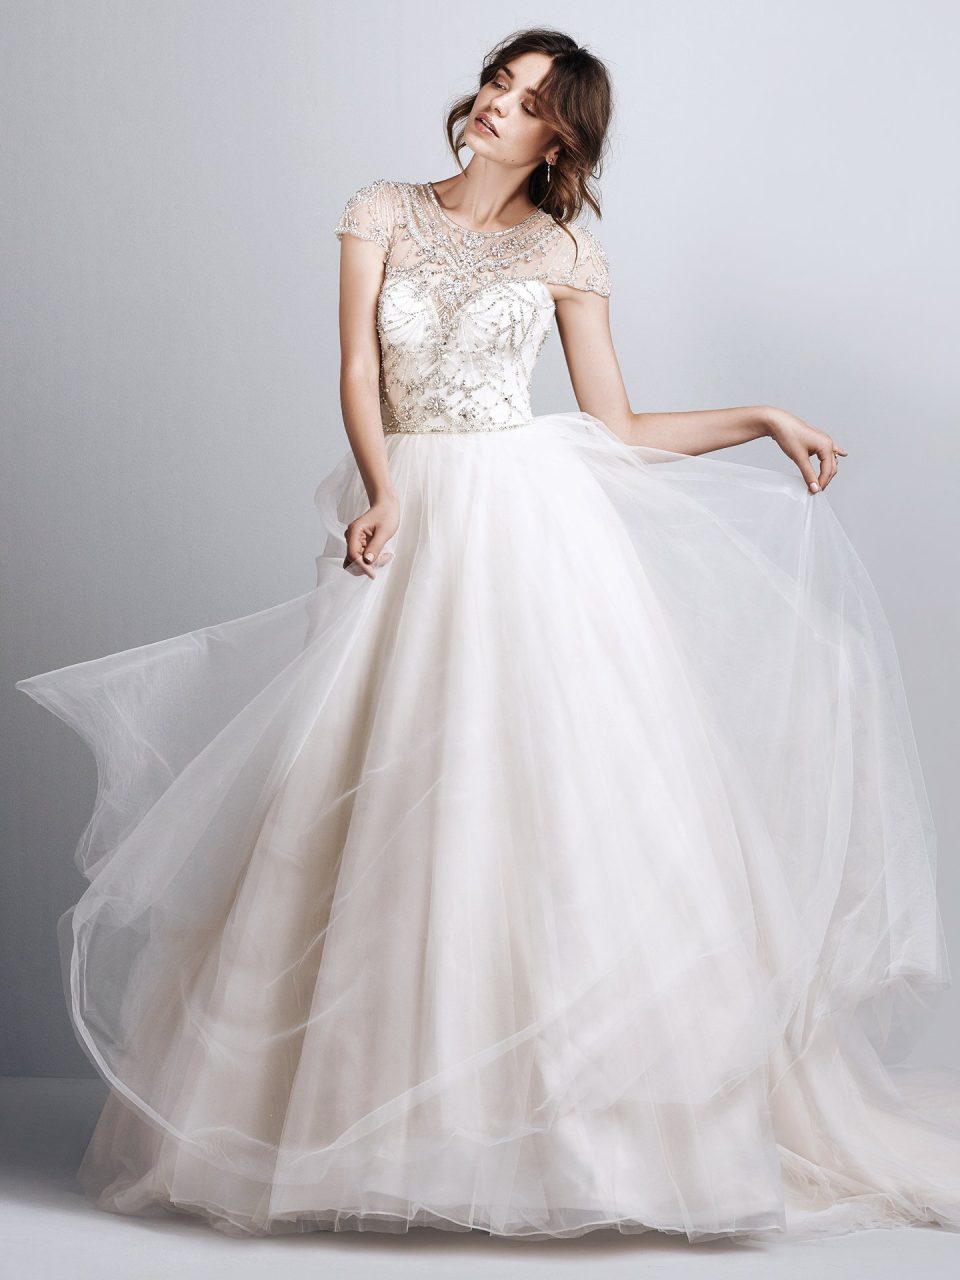 21 Exquisite Wedding Dresses with Cap Sleeves  weddingsonline